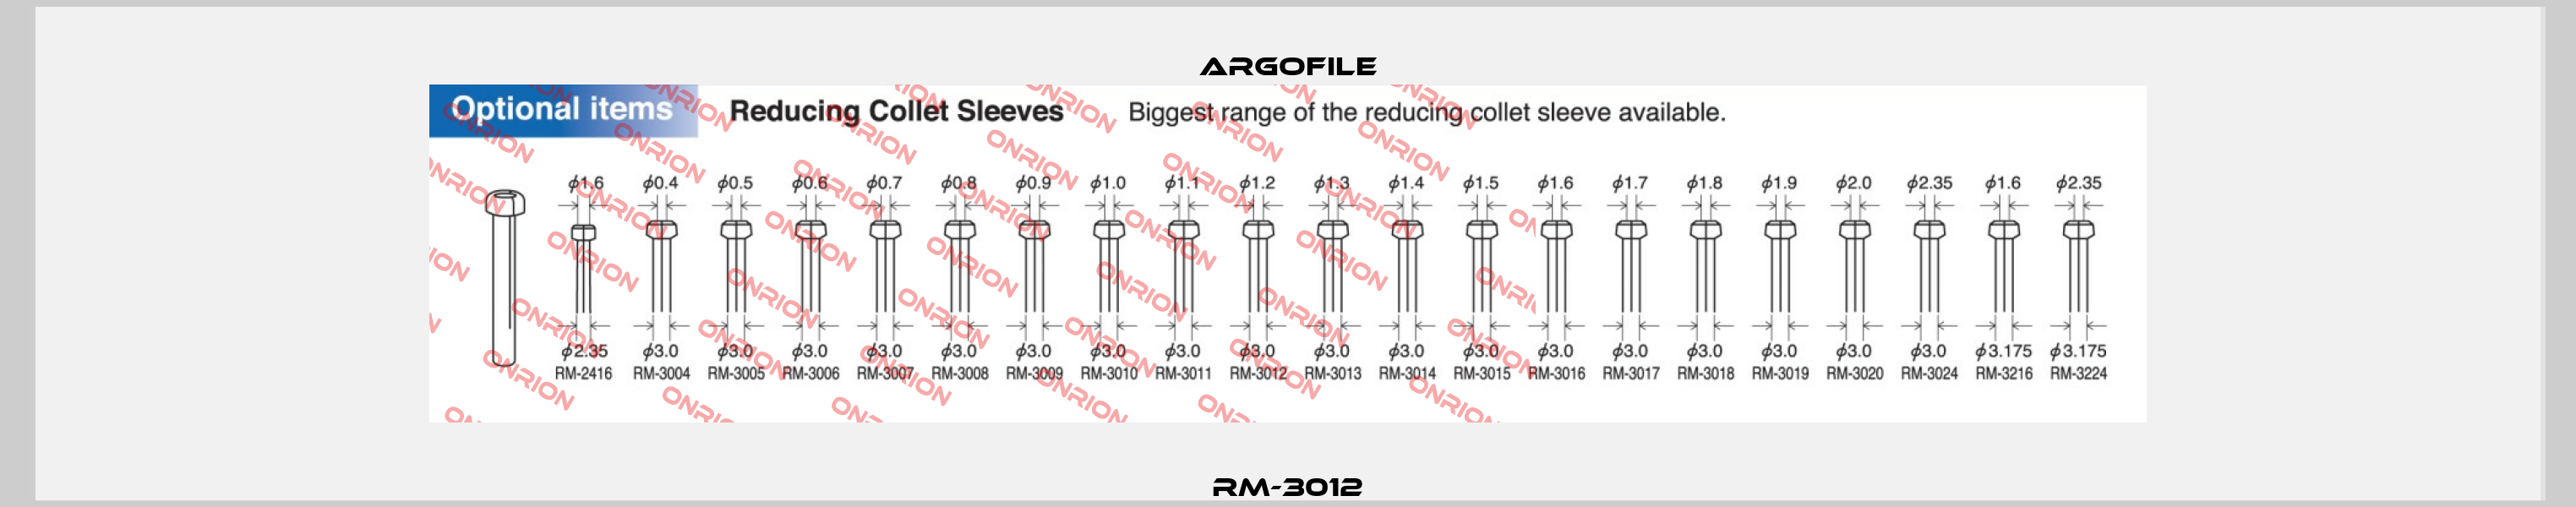 RM-3012 Argofile